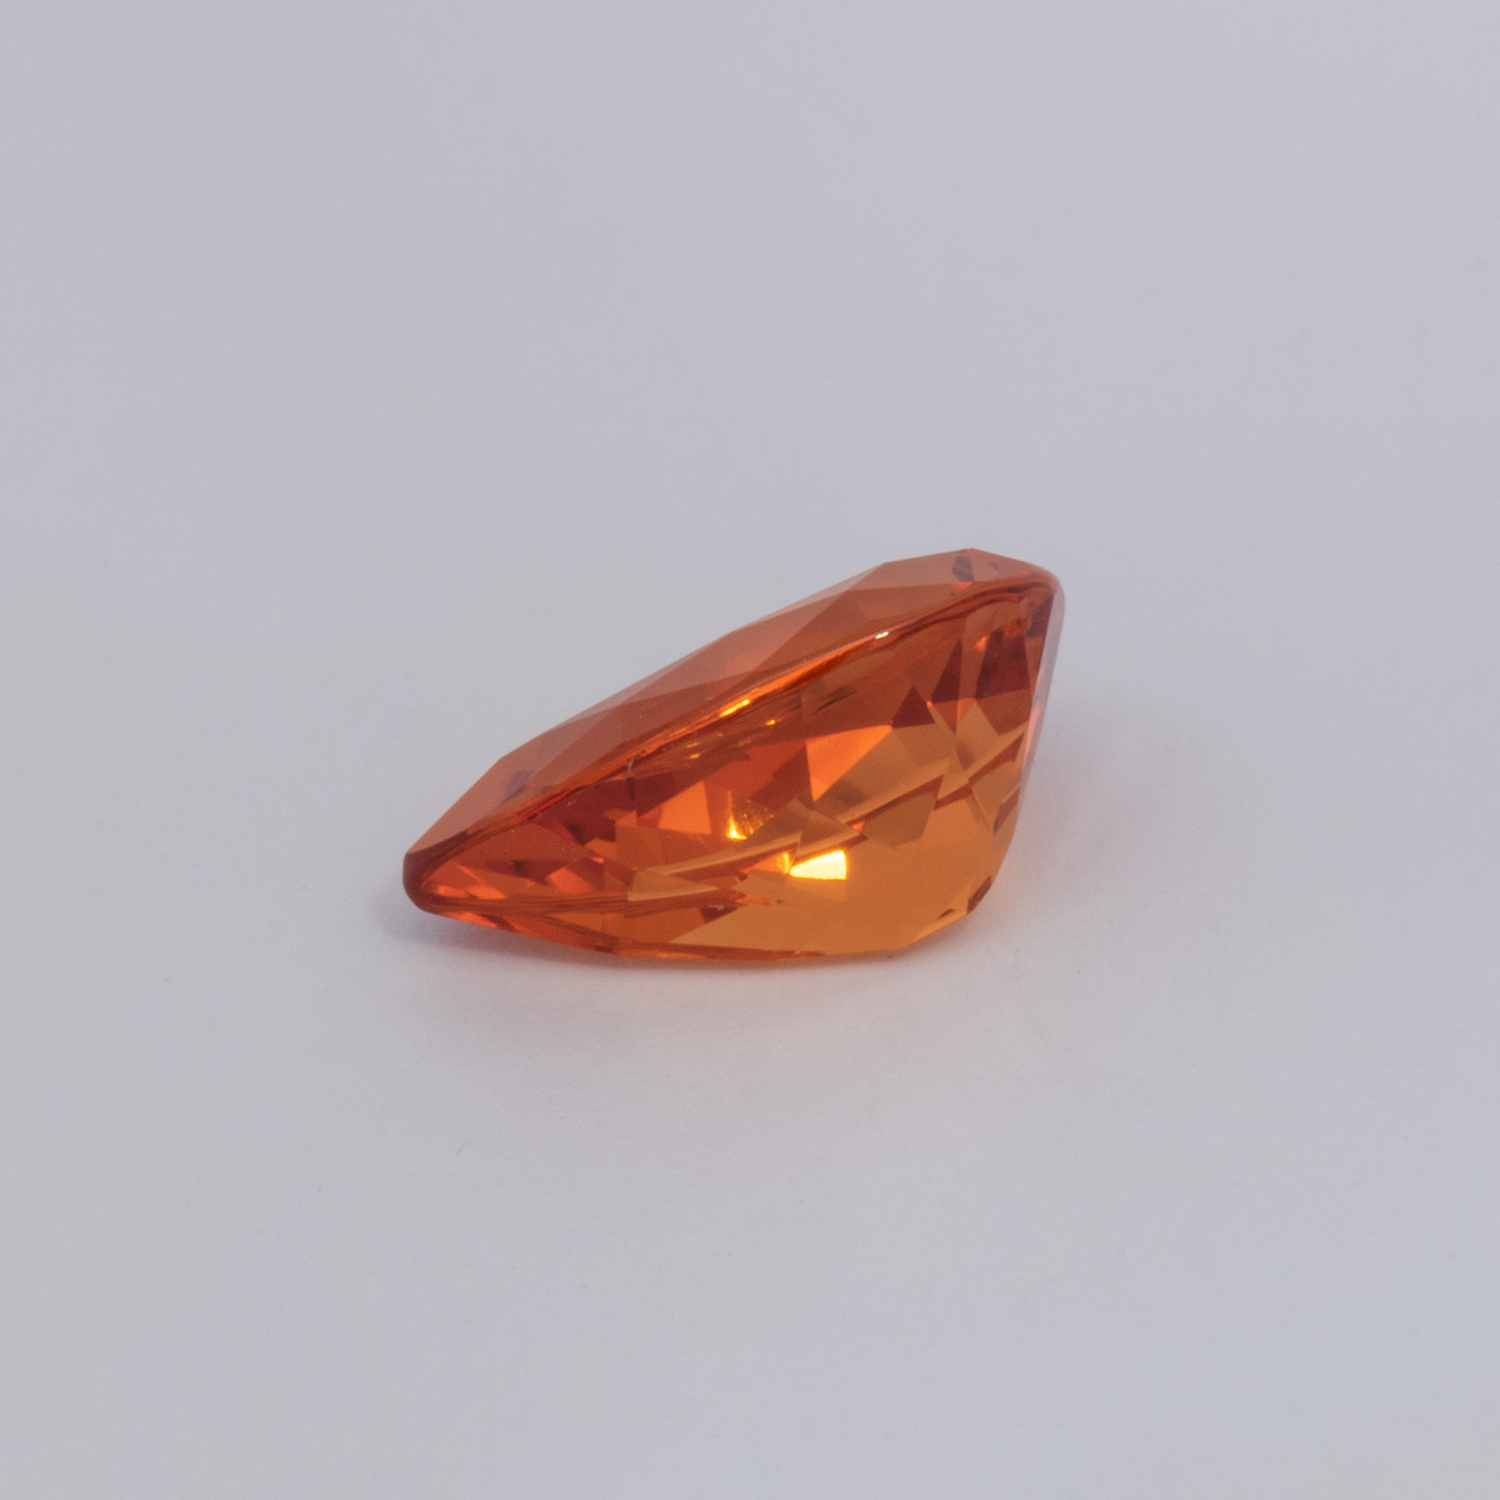 Mandarin Granat - orange, birnform, 11.6x7.3 mm, 3.53 cts, Nr. MG99064